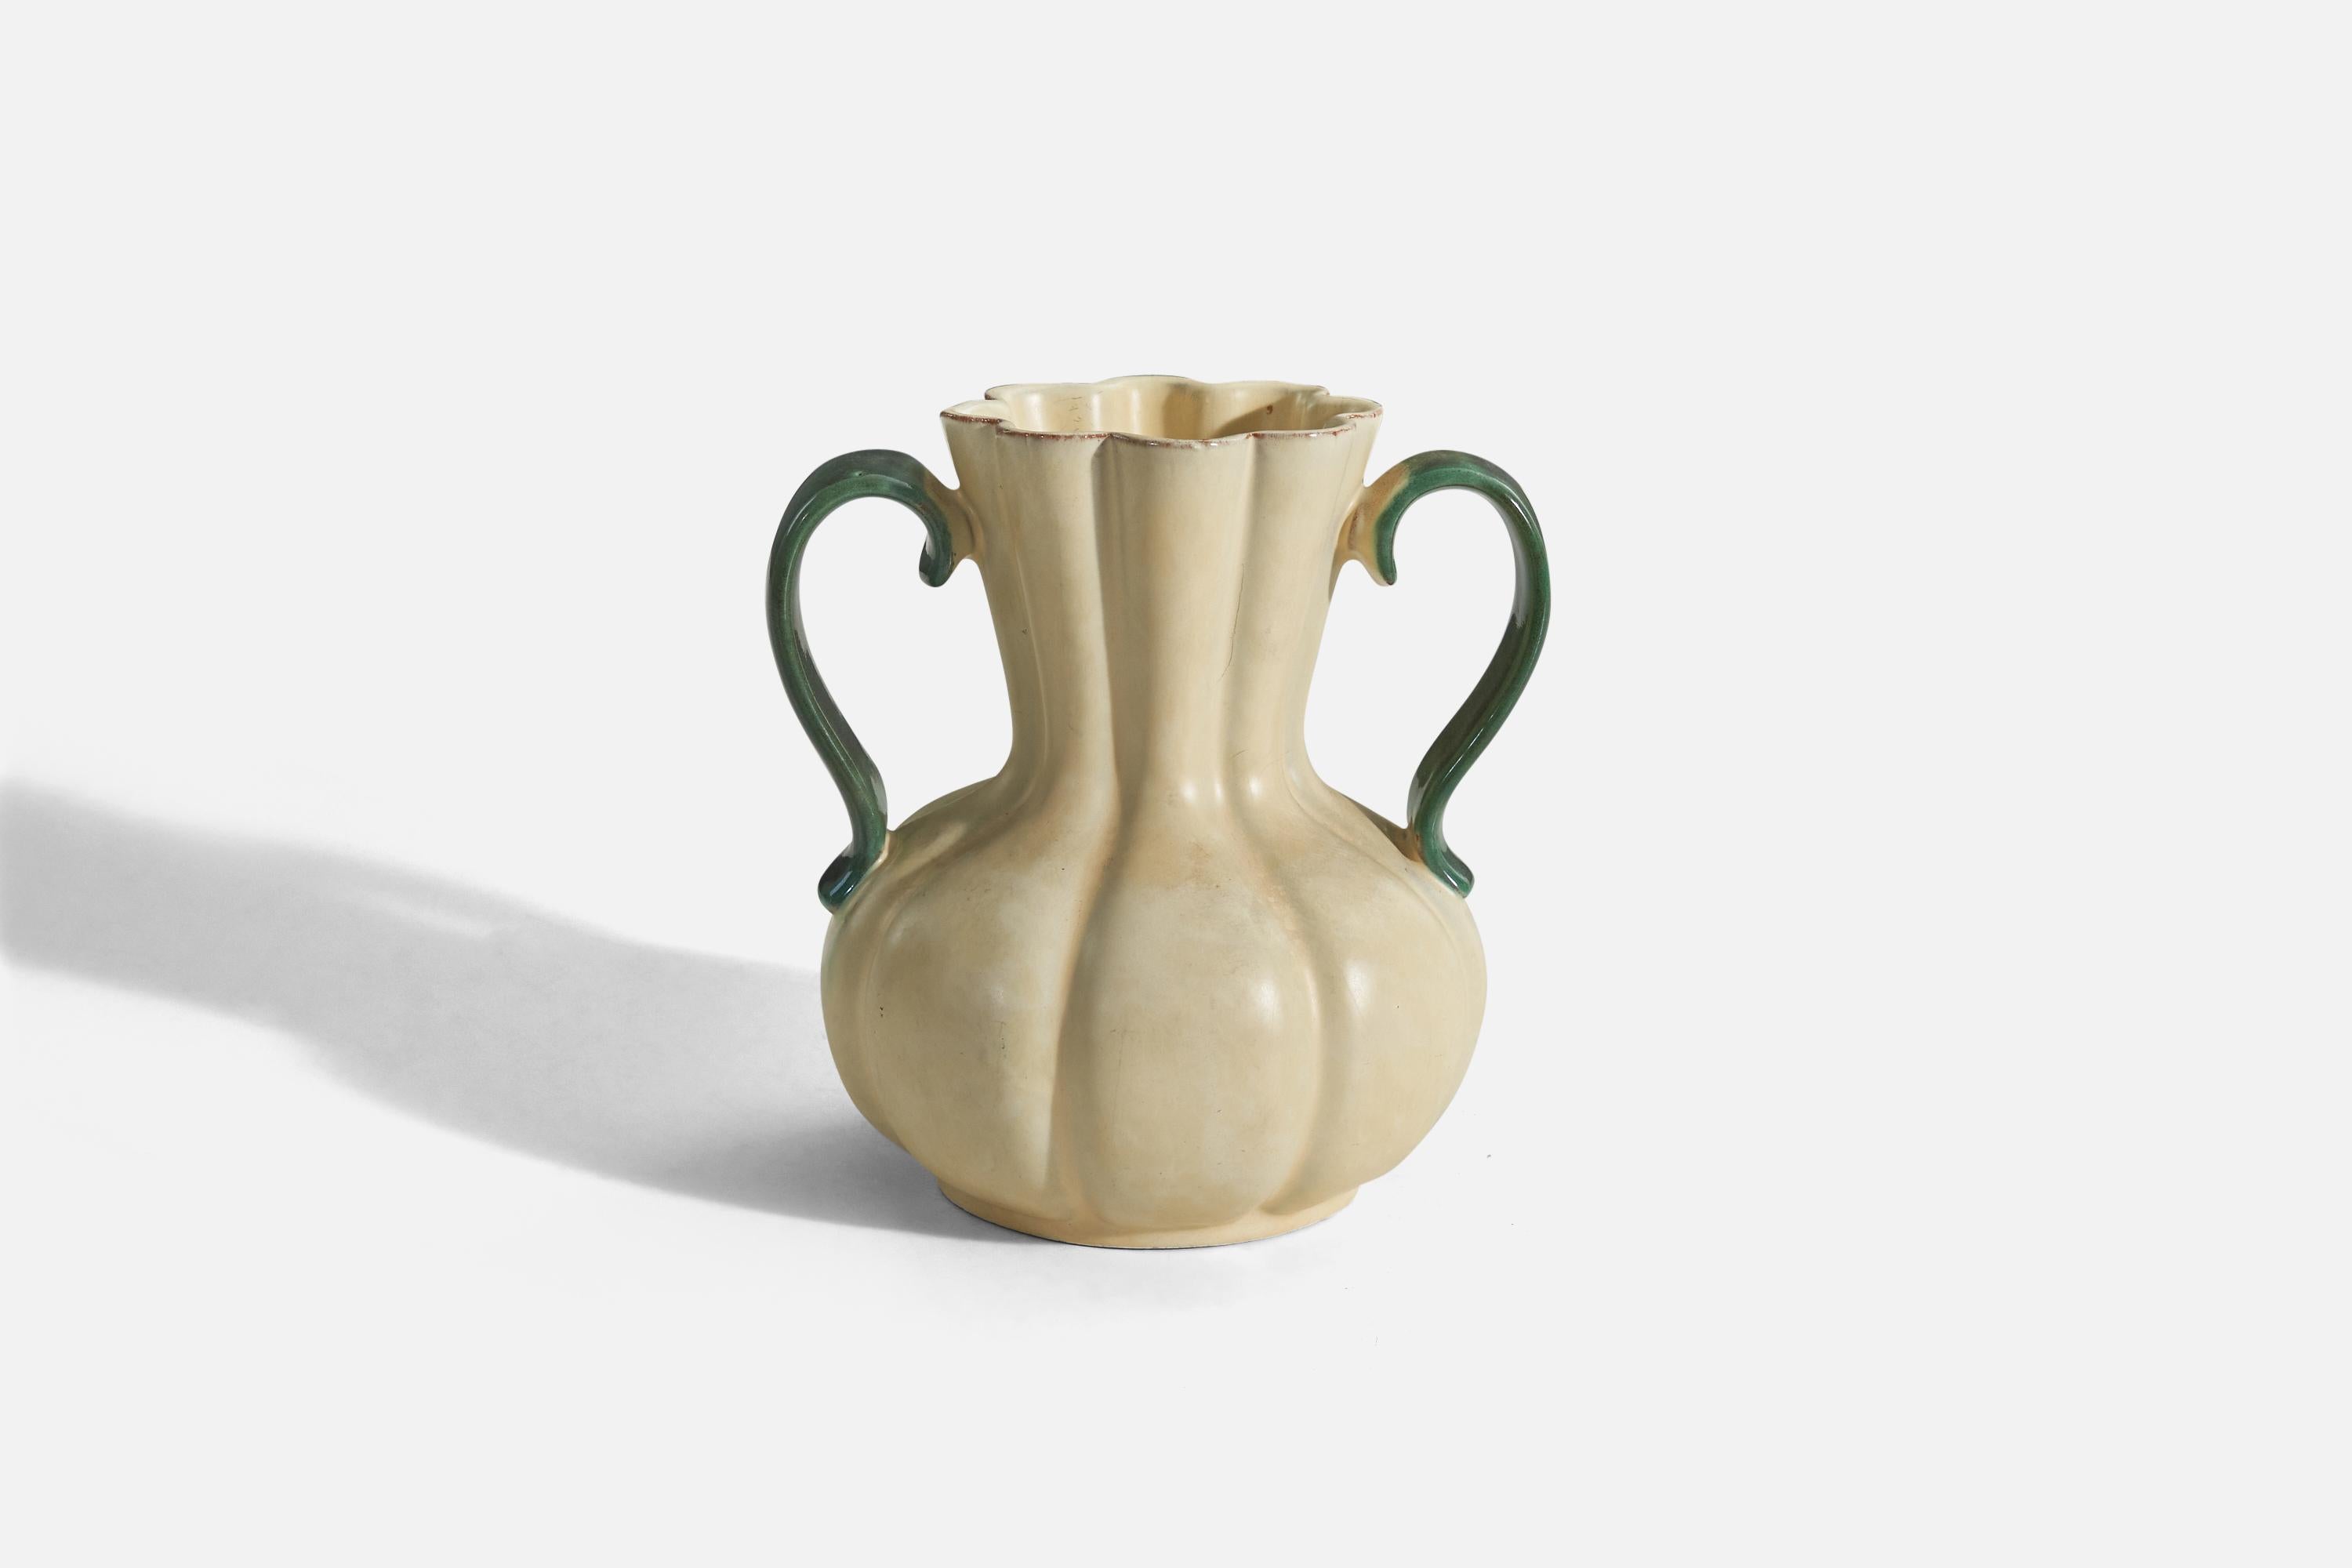 A beige and green glazed earthenware vase designed and produced by Upsala-Ekeby, Sweden, 1940s.

